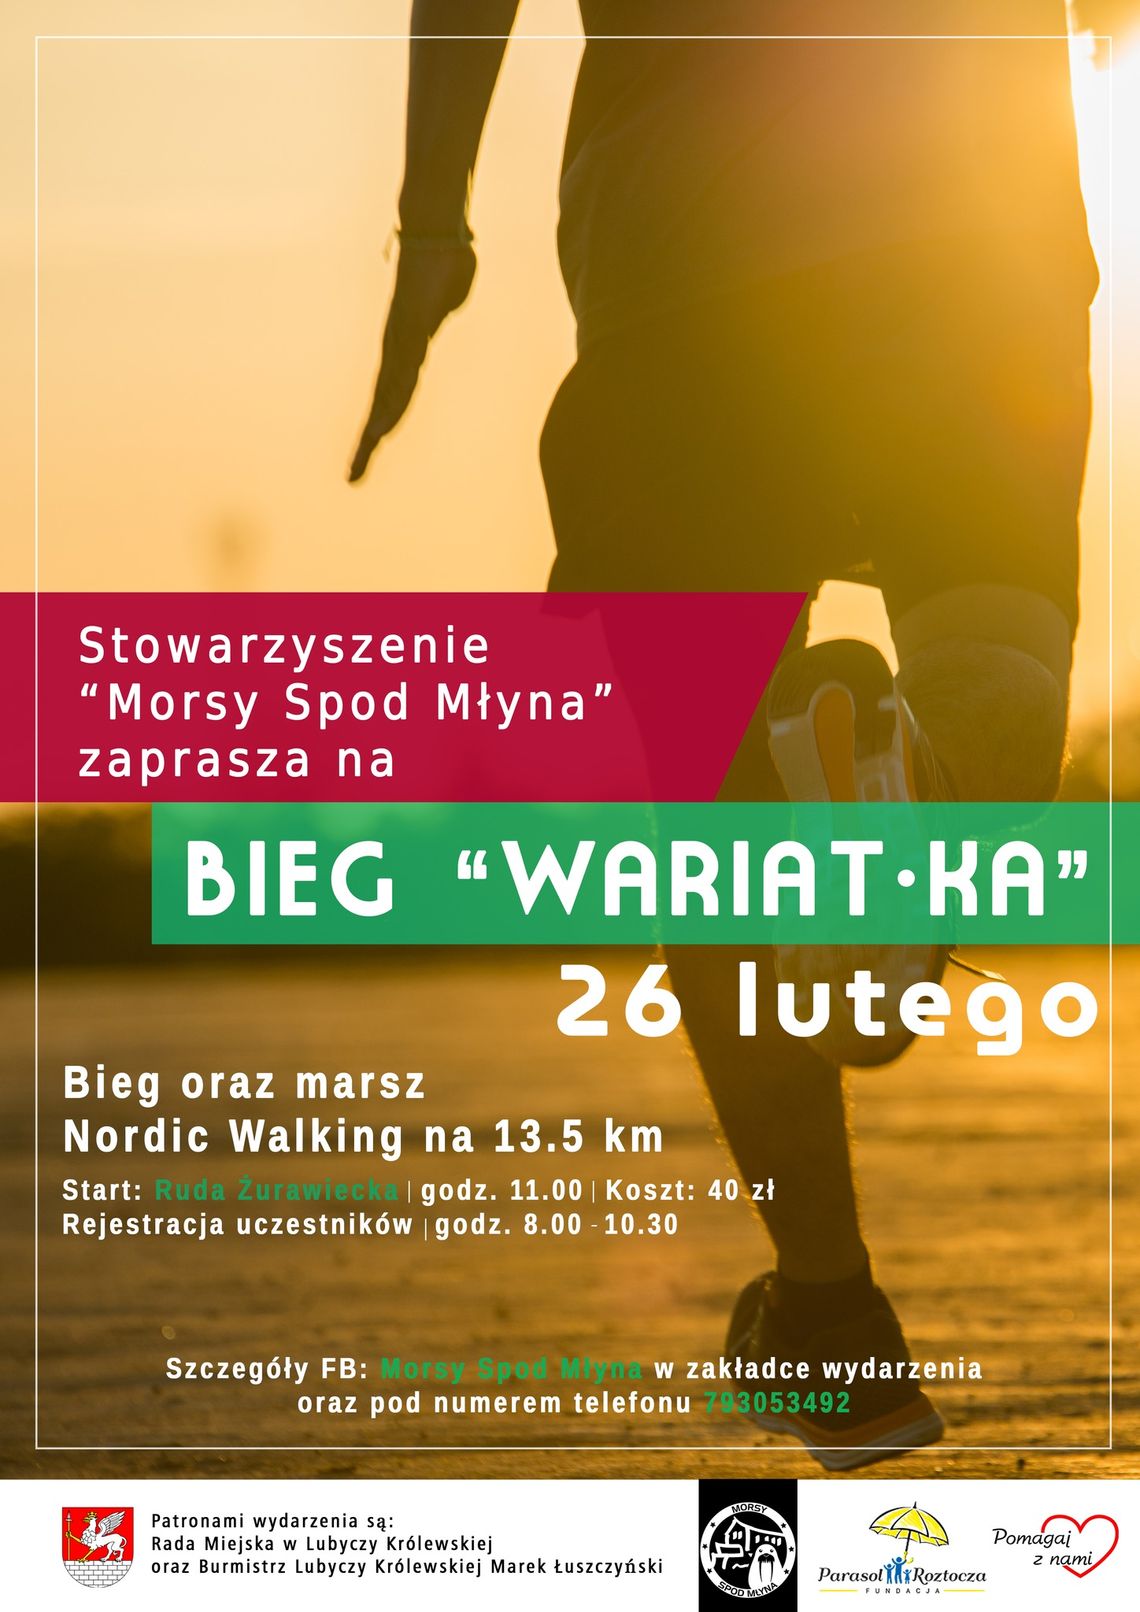 Wariat-Ka biegnie 26 lutego!